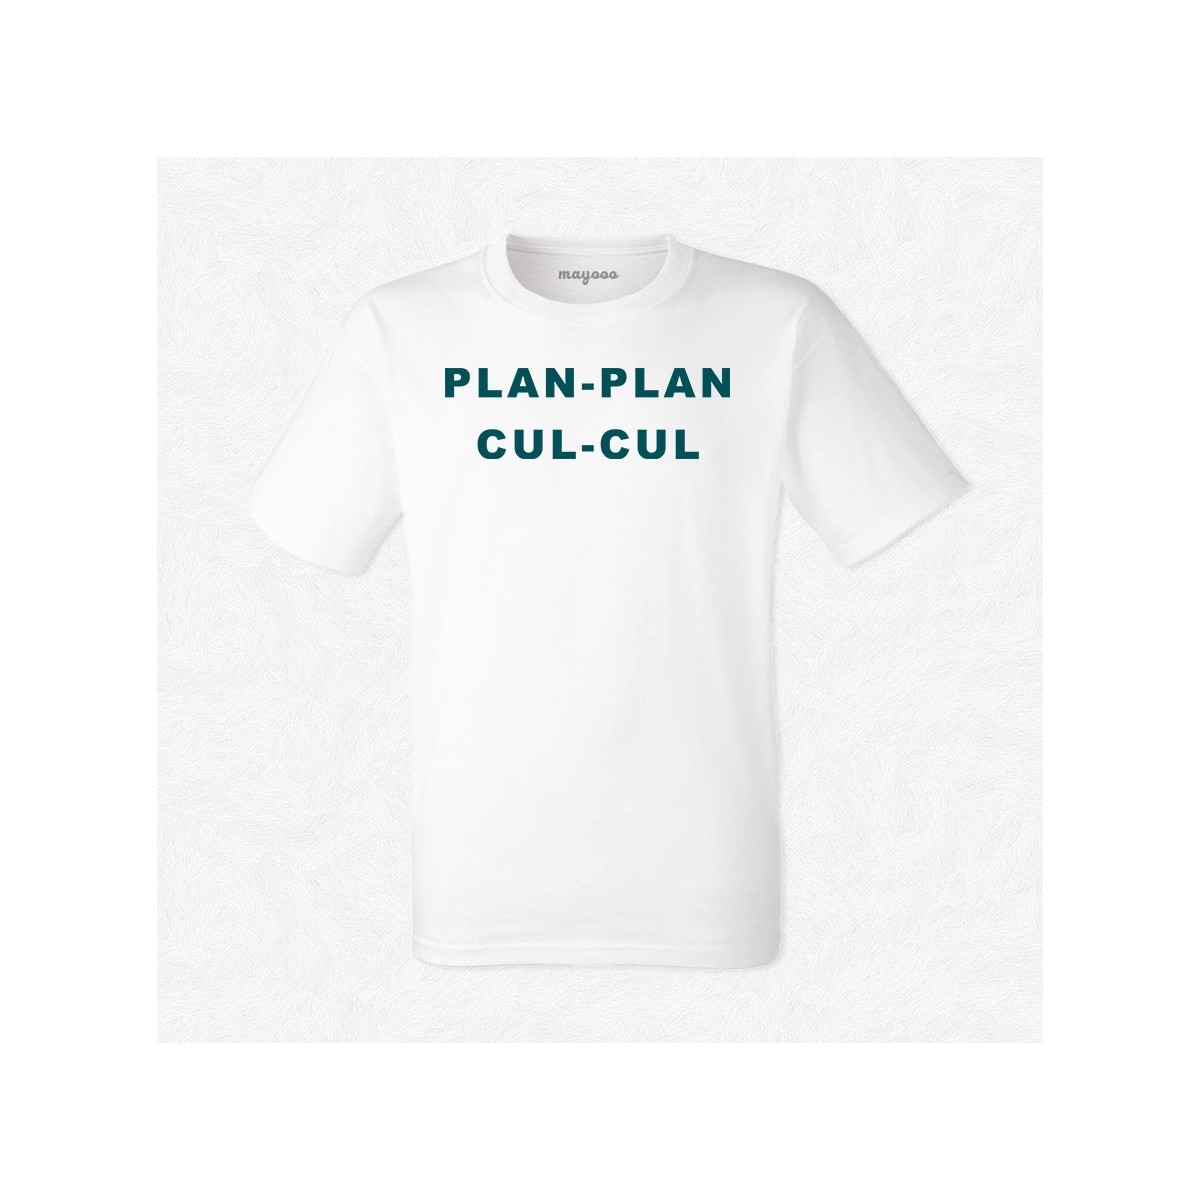 T-shirt Plan plan cul cul